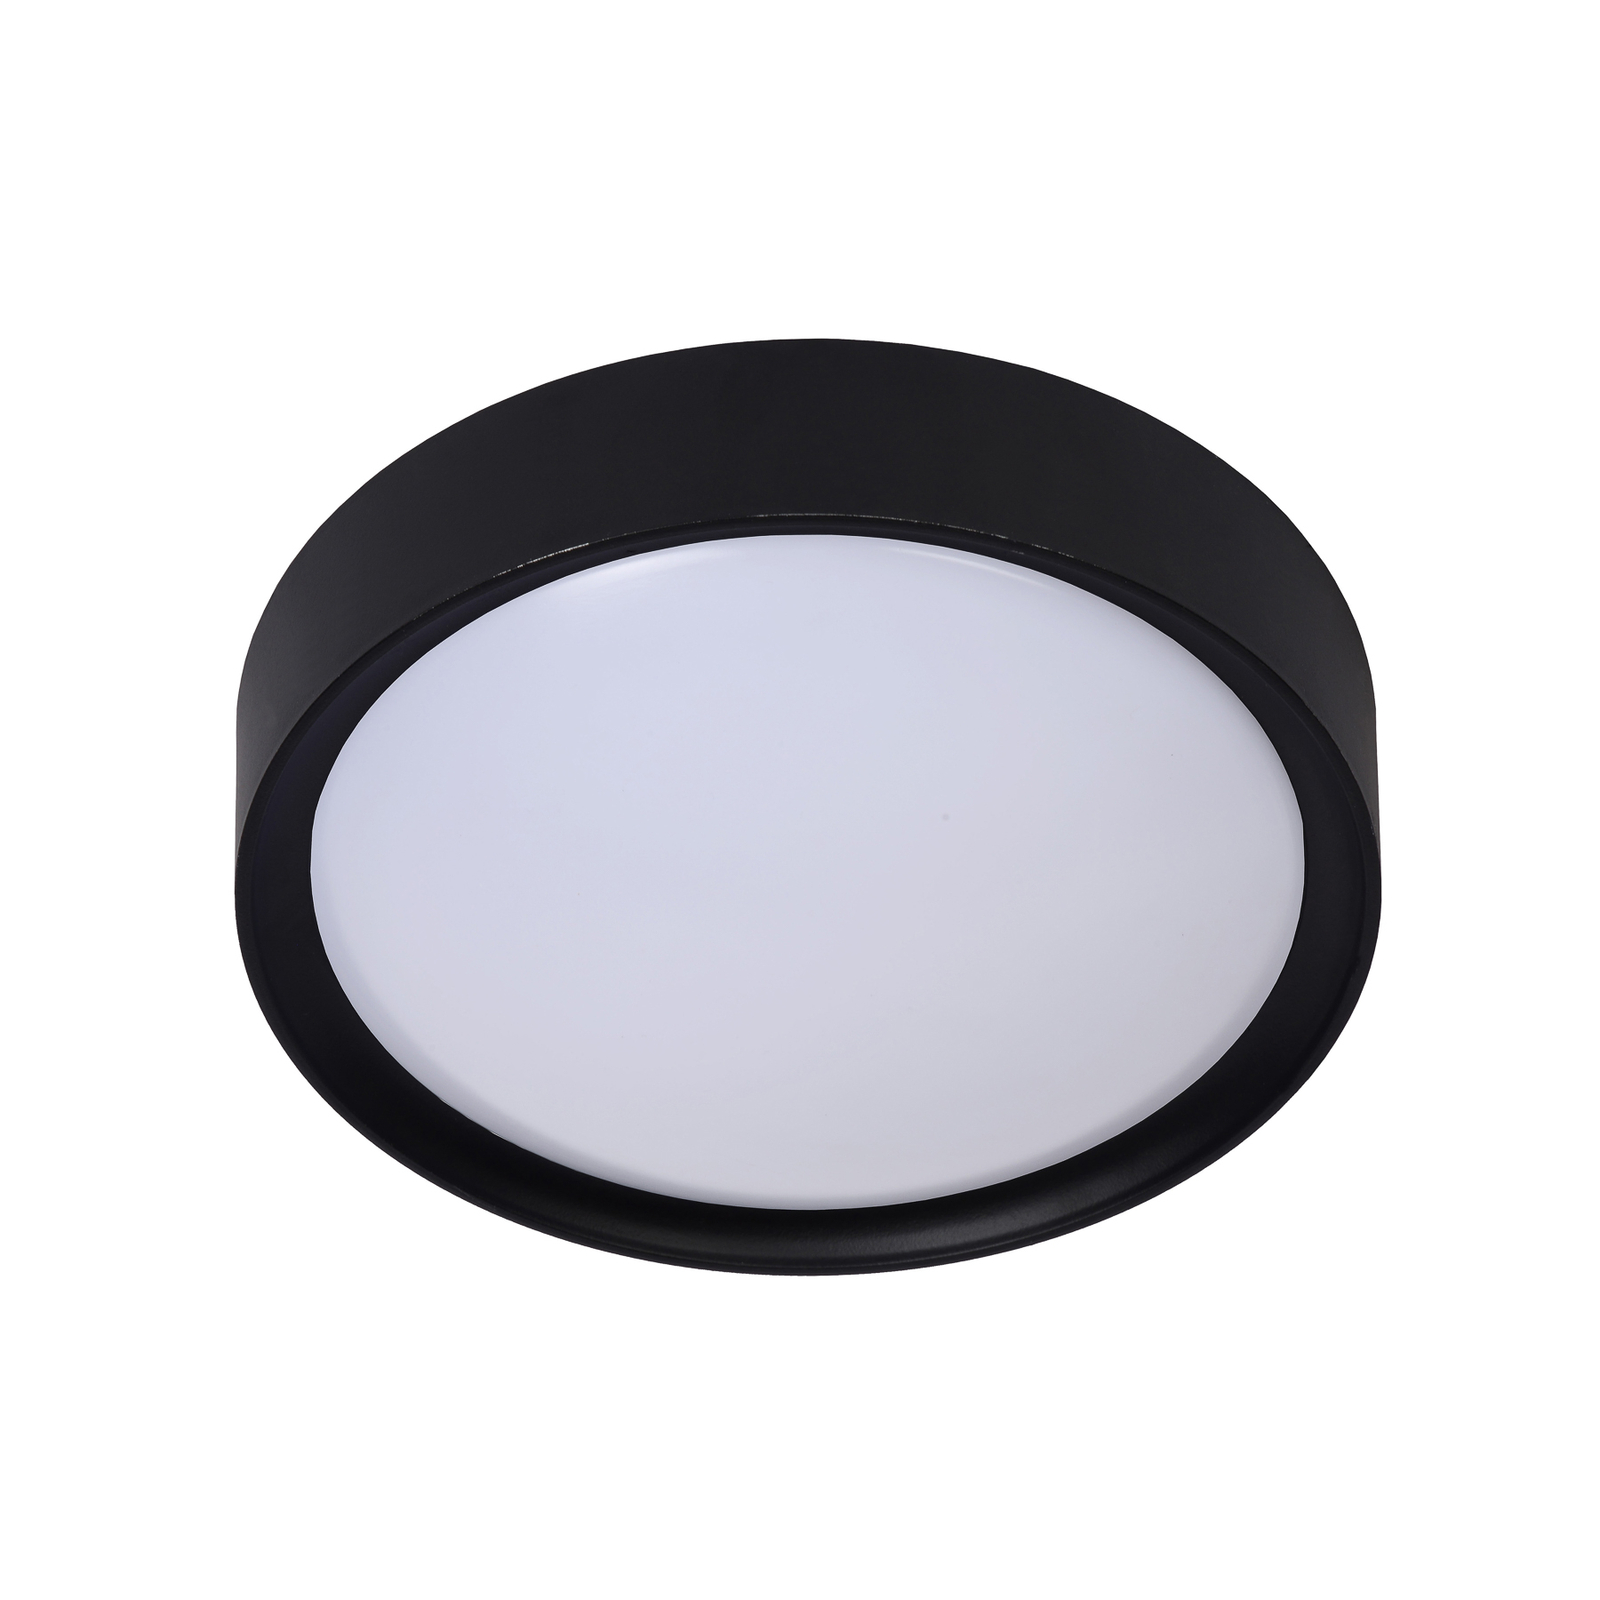 Stropna svetilka Lex, okrogla, Ø 25 cm, črna